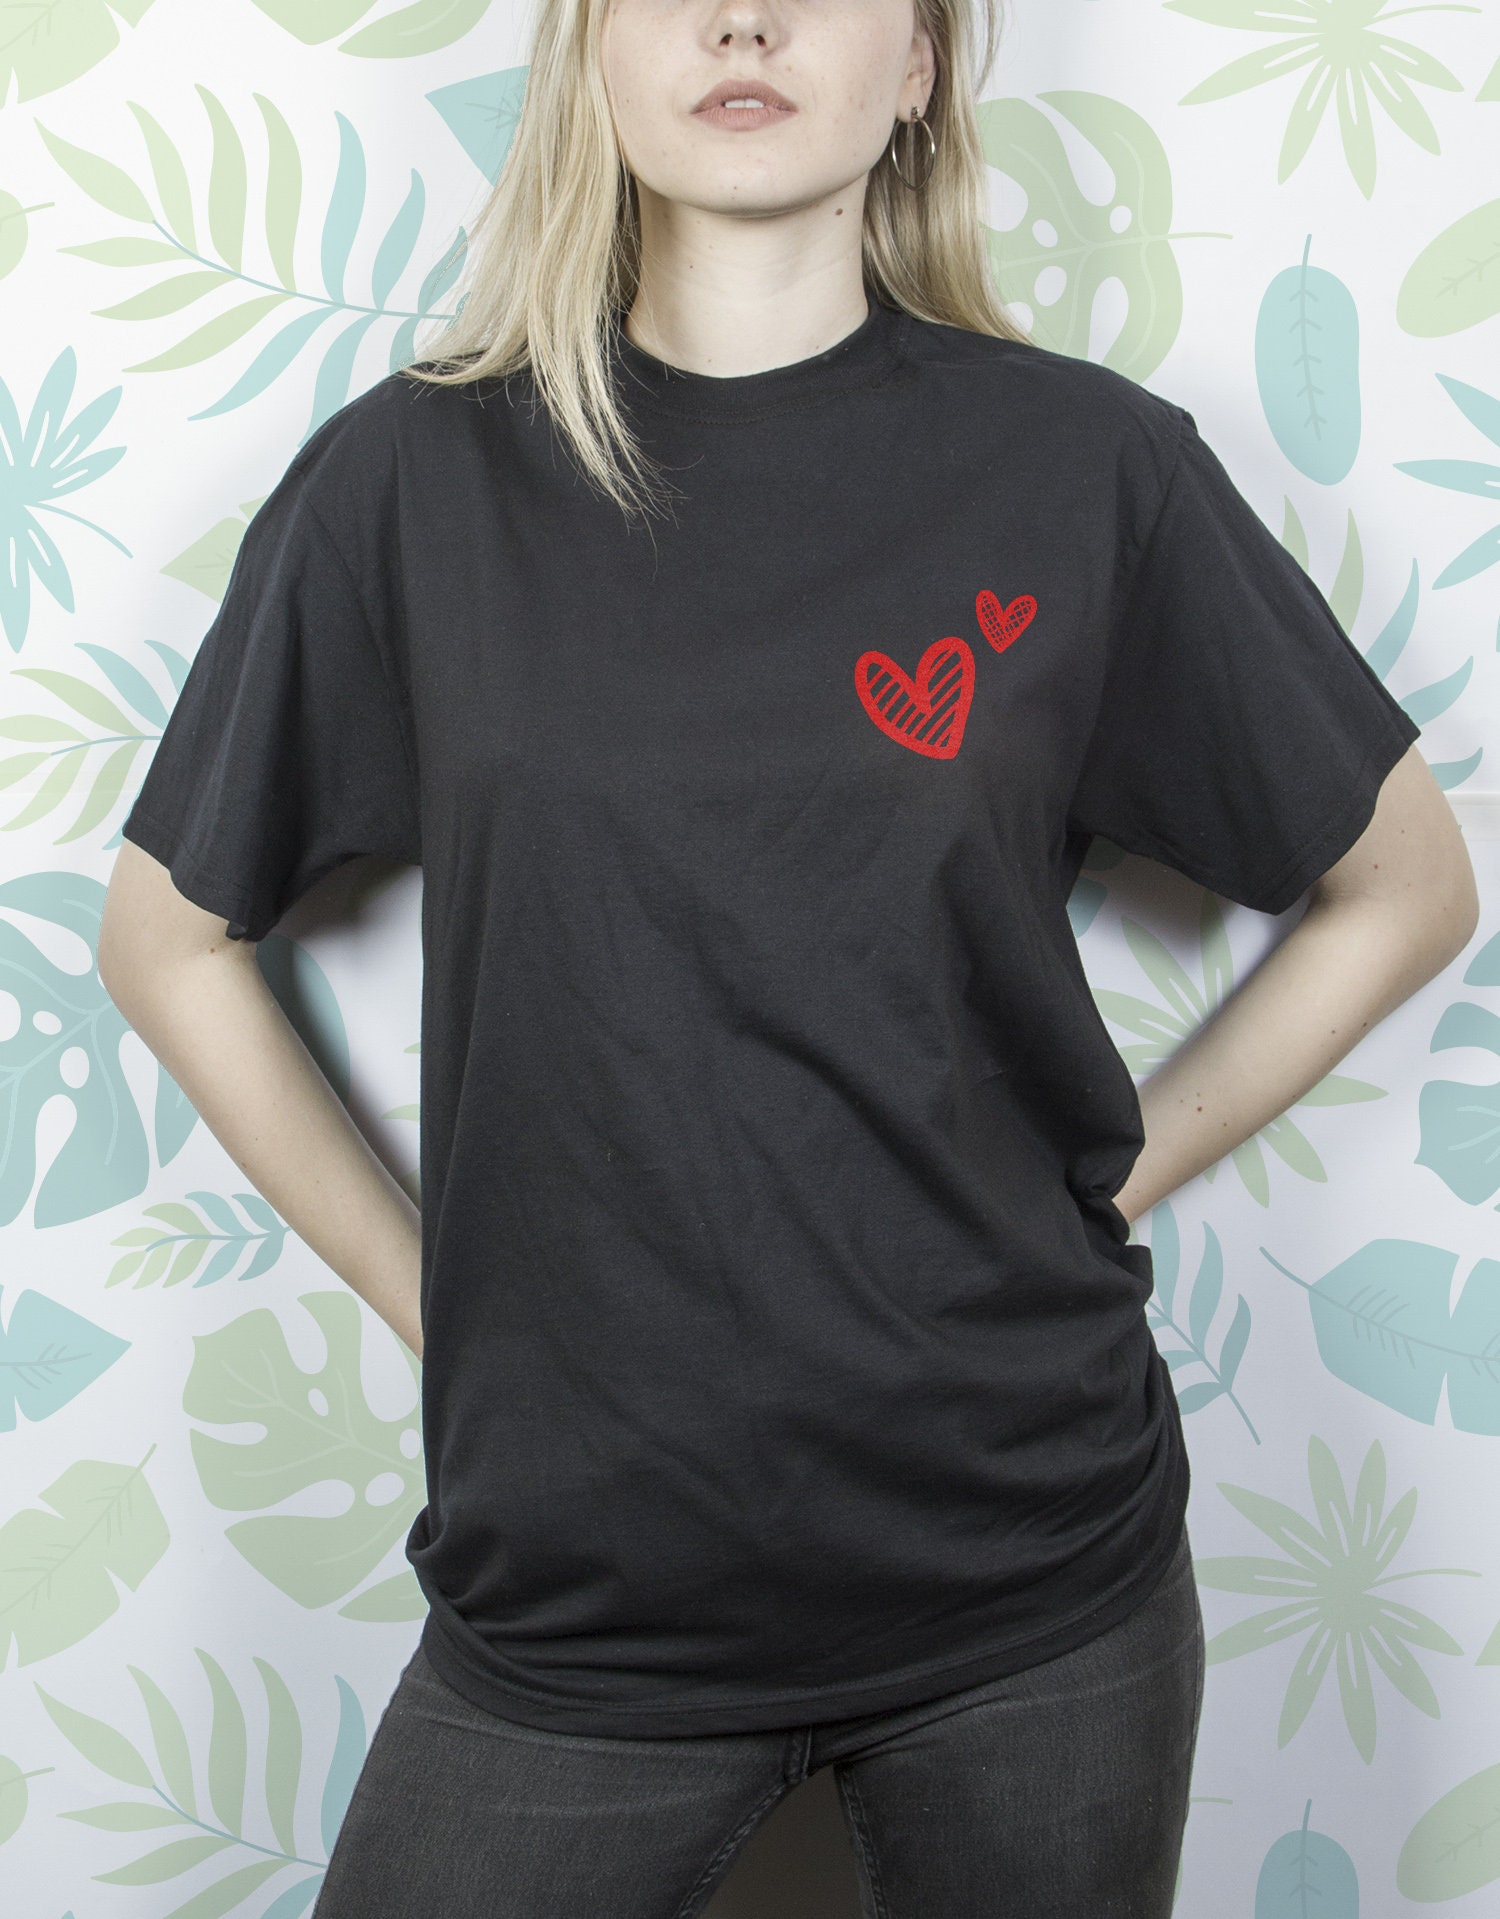 Hearts shirt for Women Men Girl t shirt tshirt Valentine | Etsy